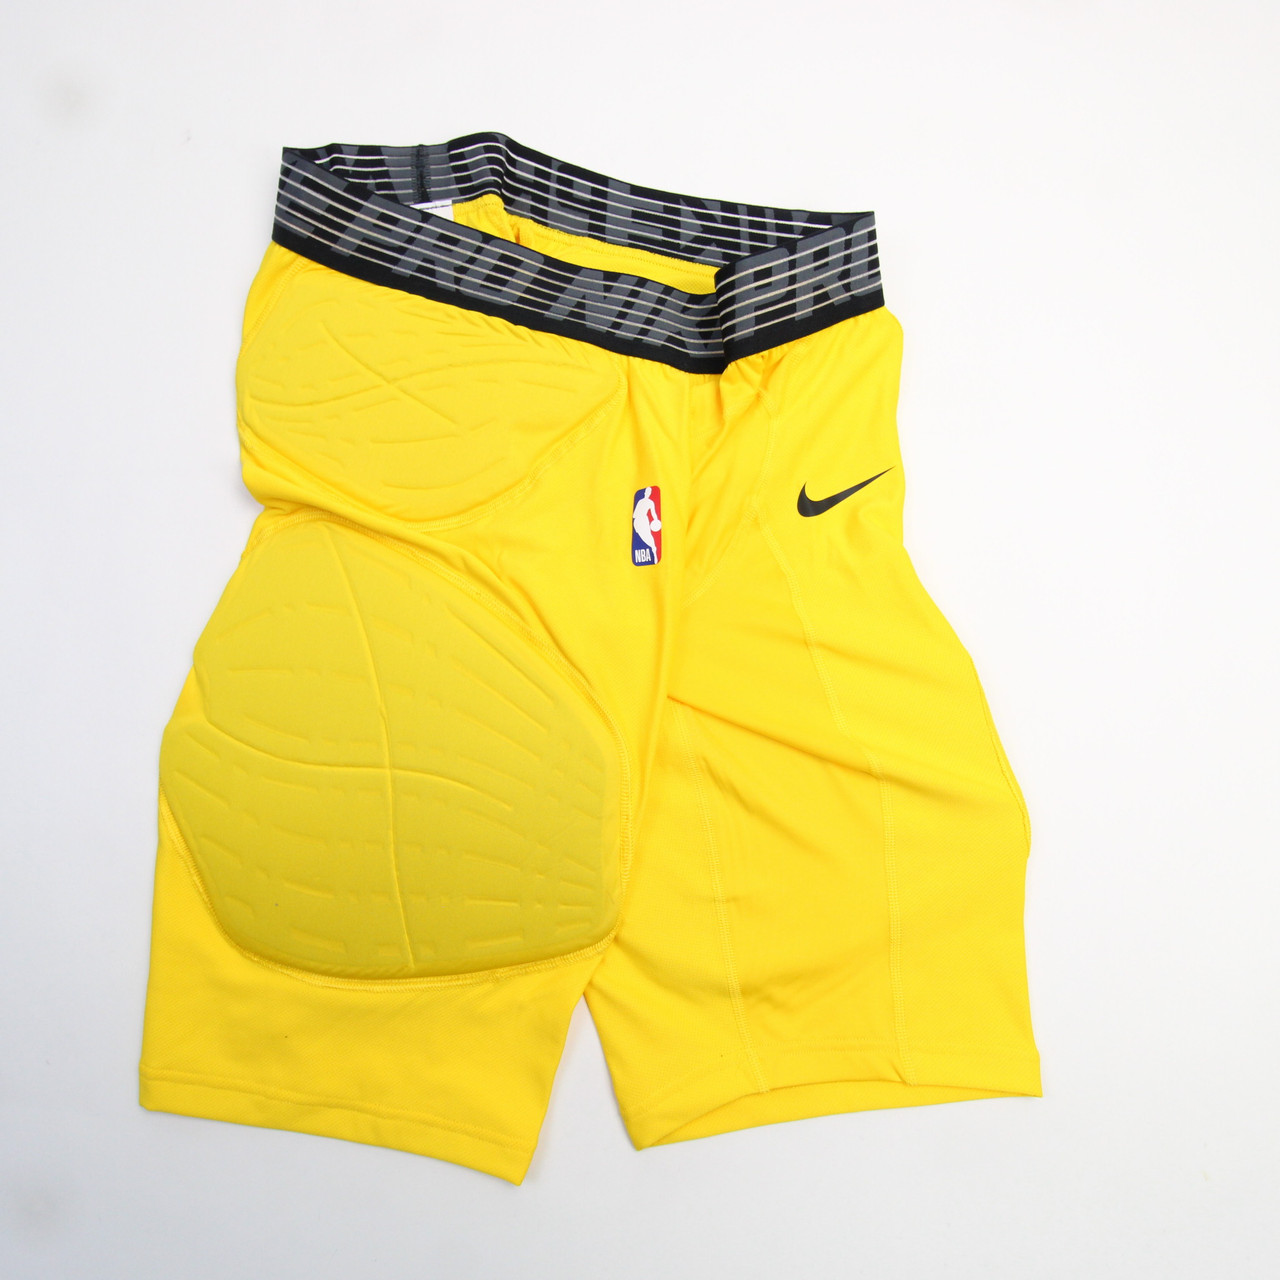 Nike Pro Combat Padded Compression Shorts Football Mens 3XL NEW